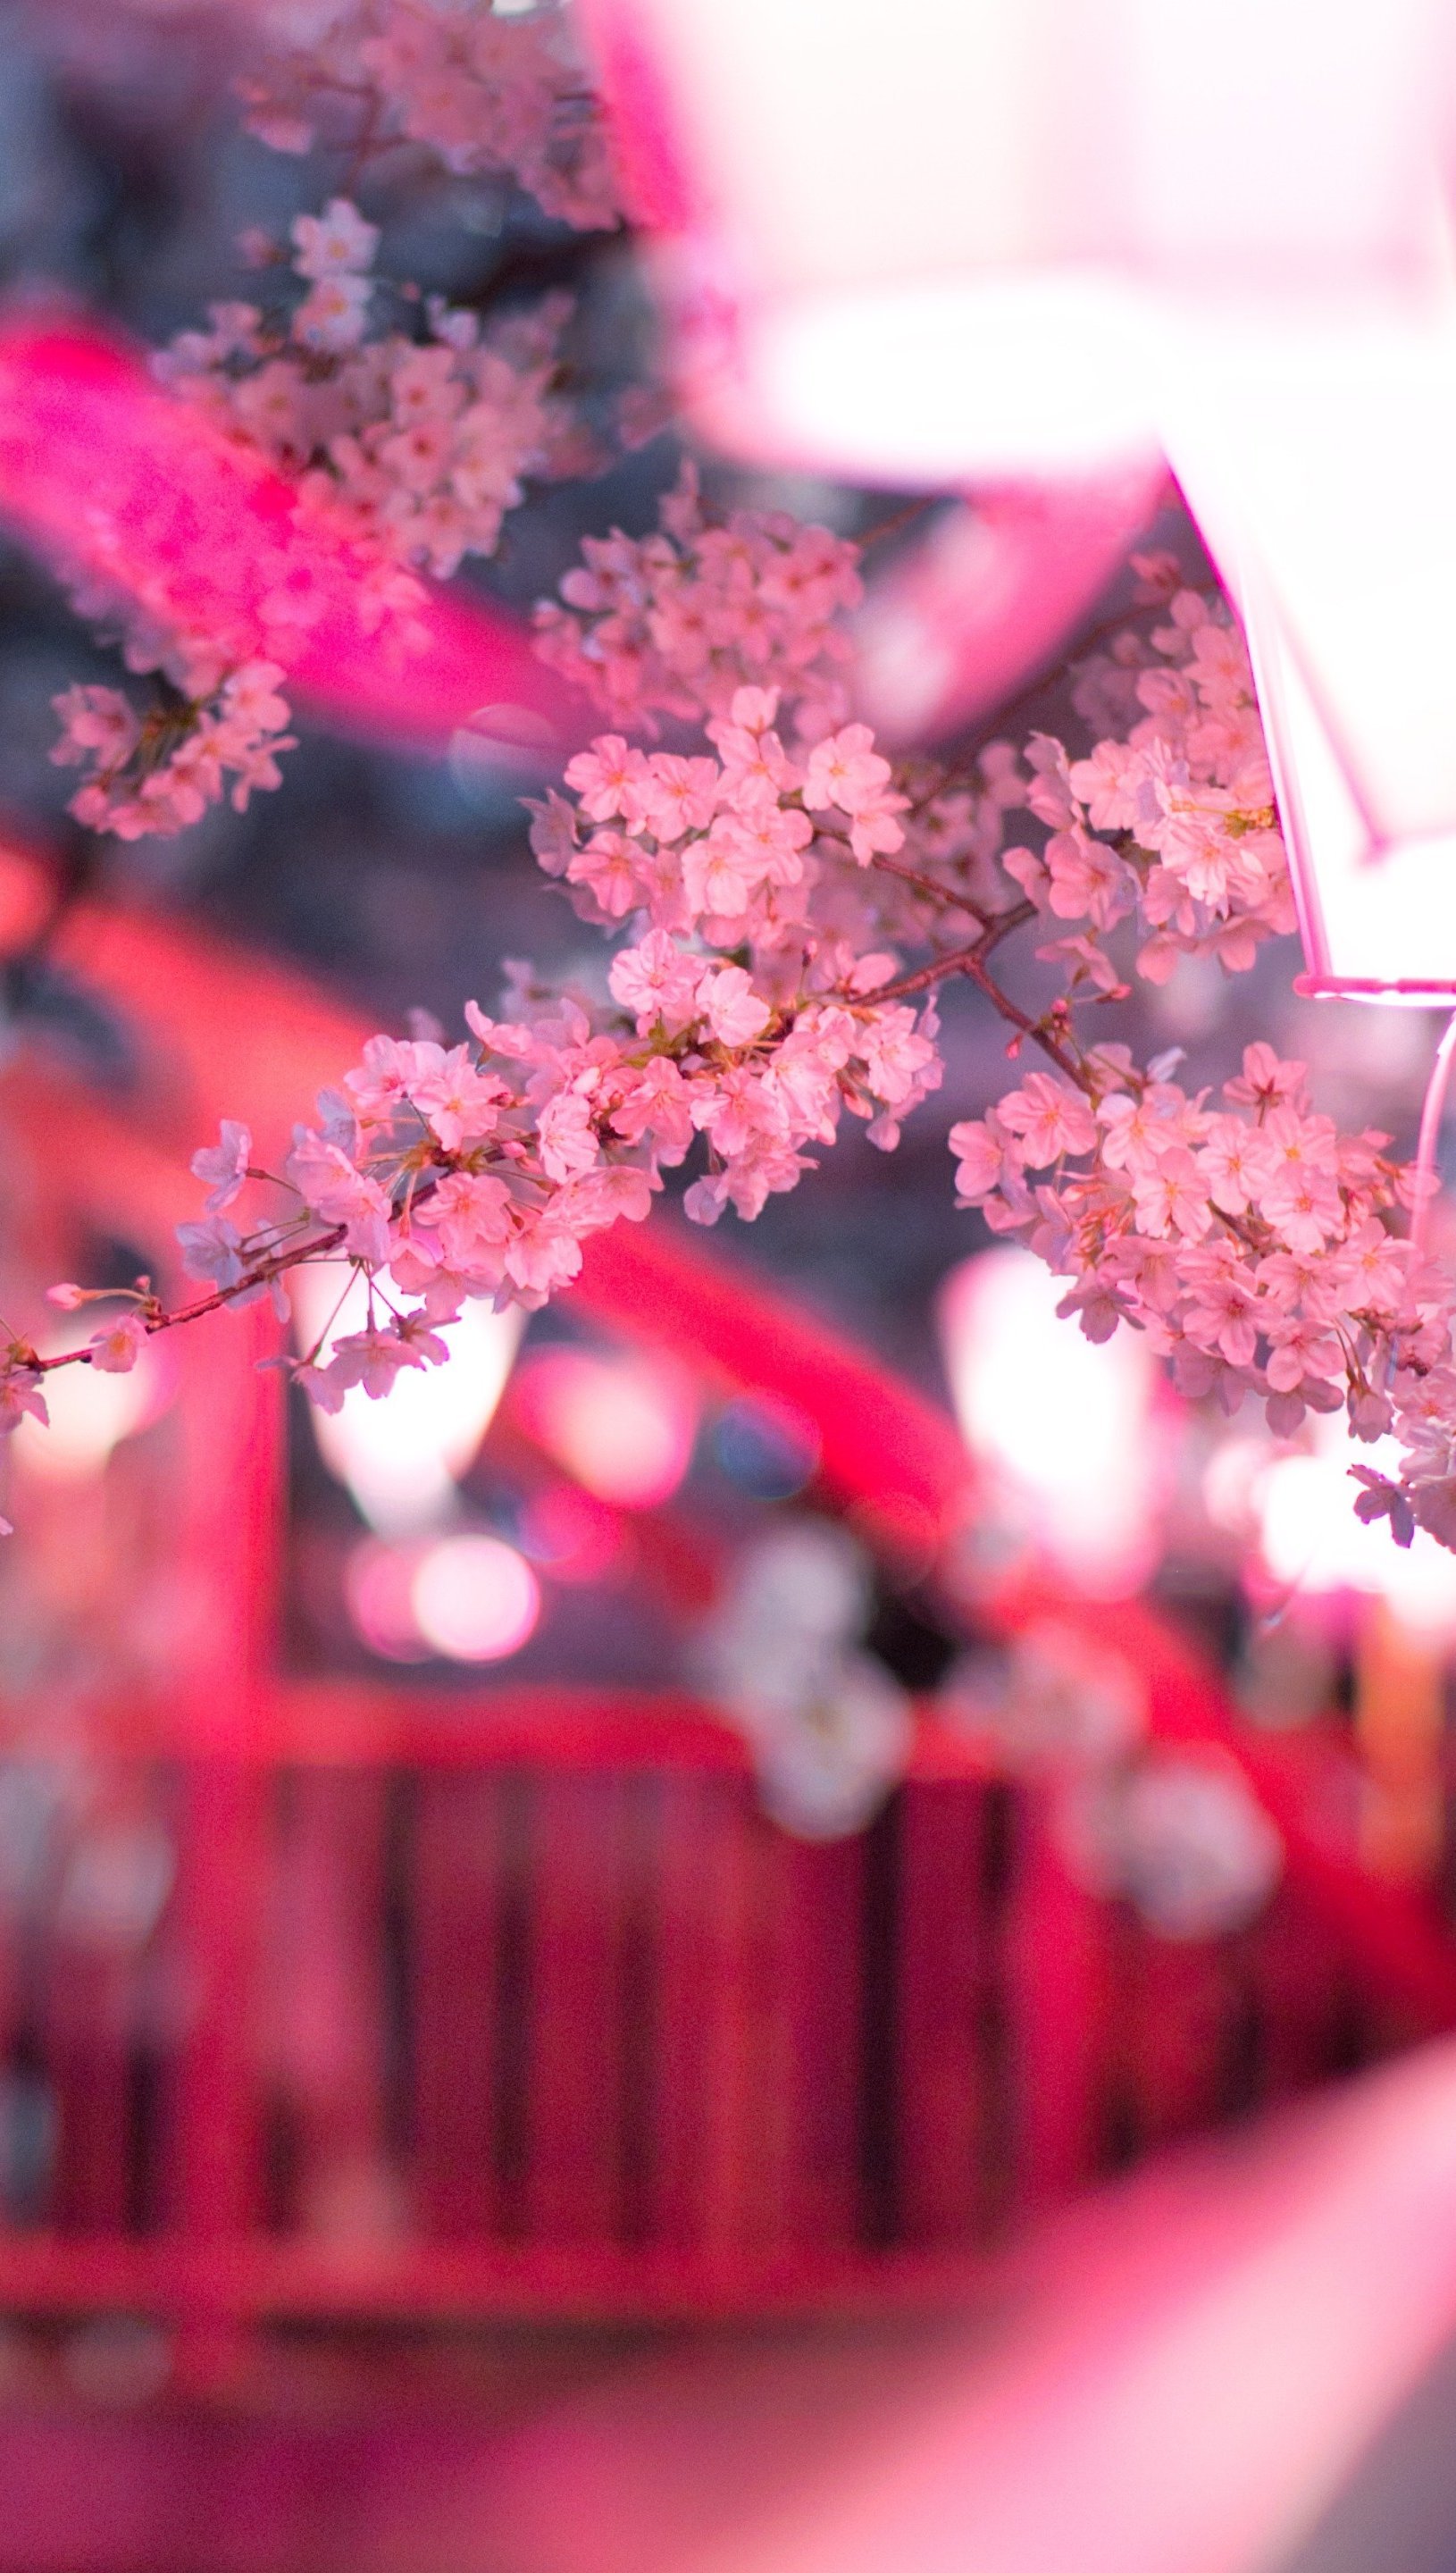 Cherry blossom with streetlights Wallpaper 5k Ultra HD ID:4631